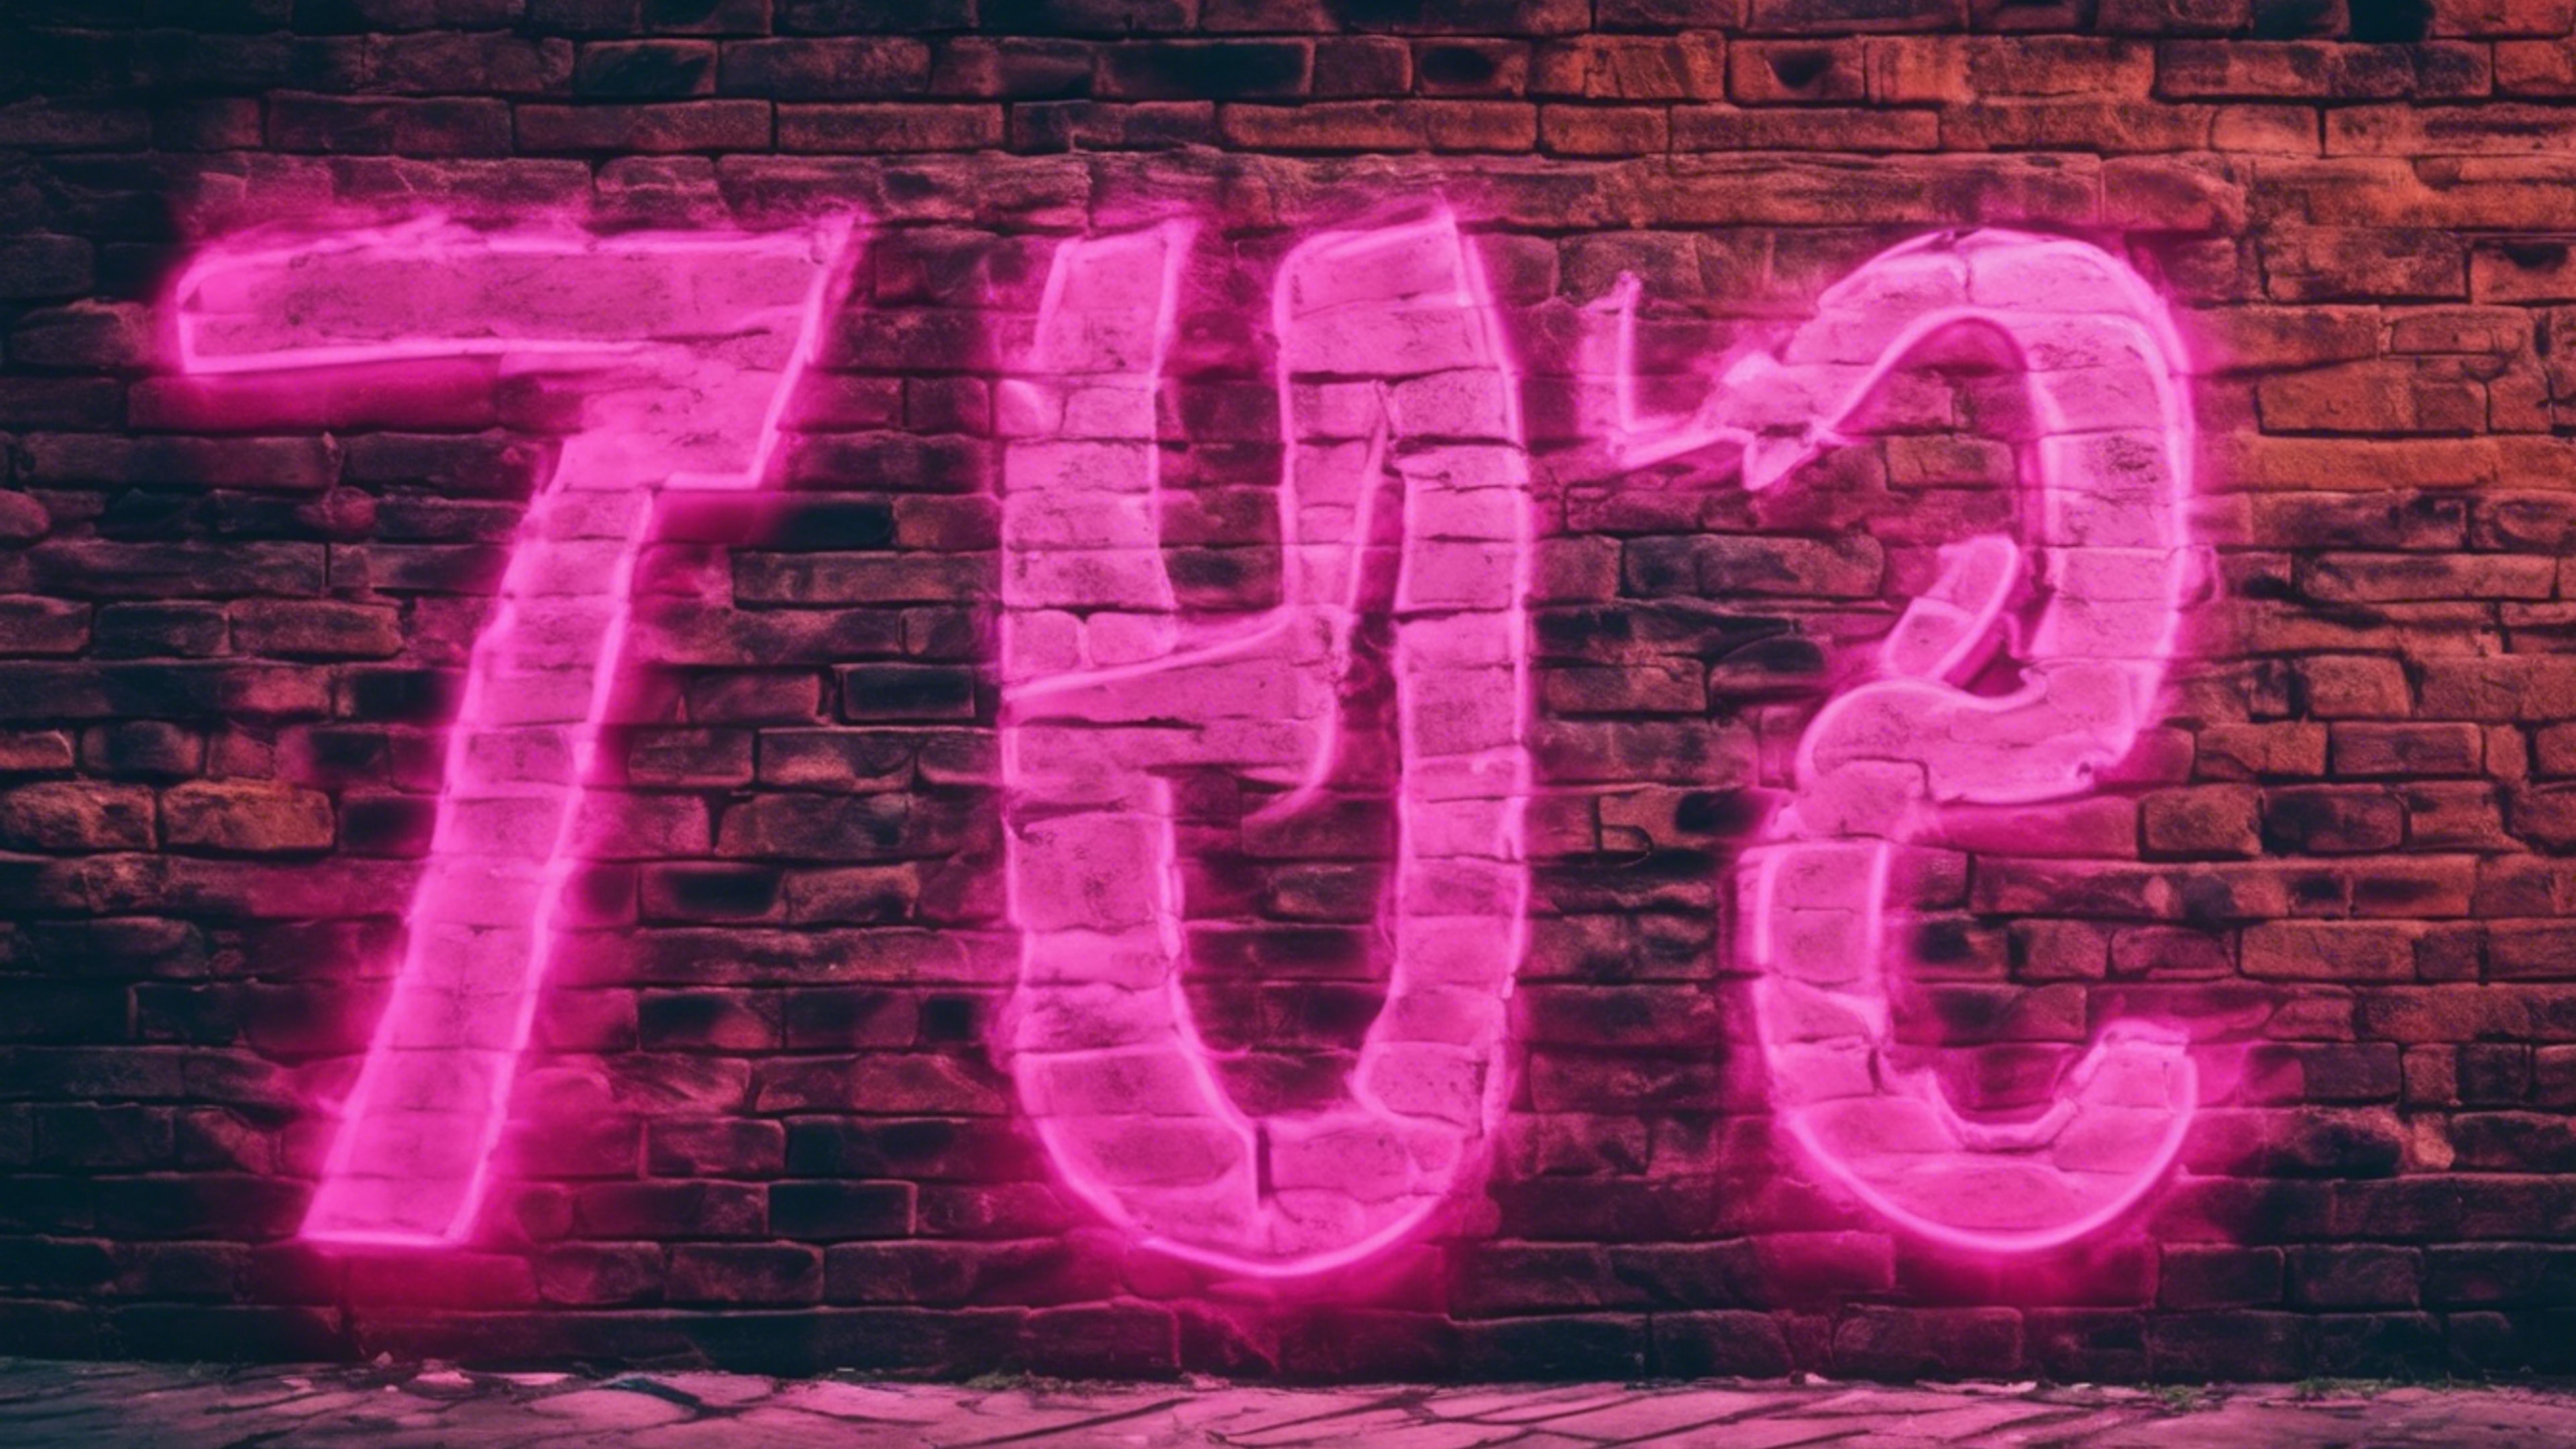 A bright neon pink graffiti on an old brick wall in an urban setting. Tapéta[f64c7f440a704c87afc0]